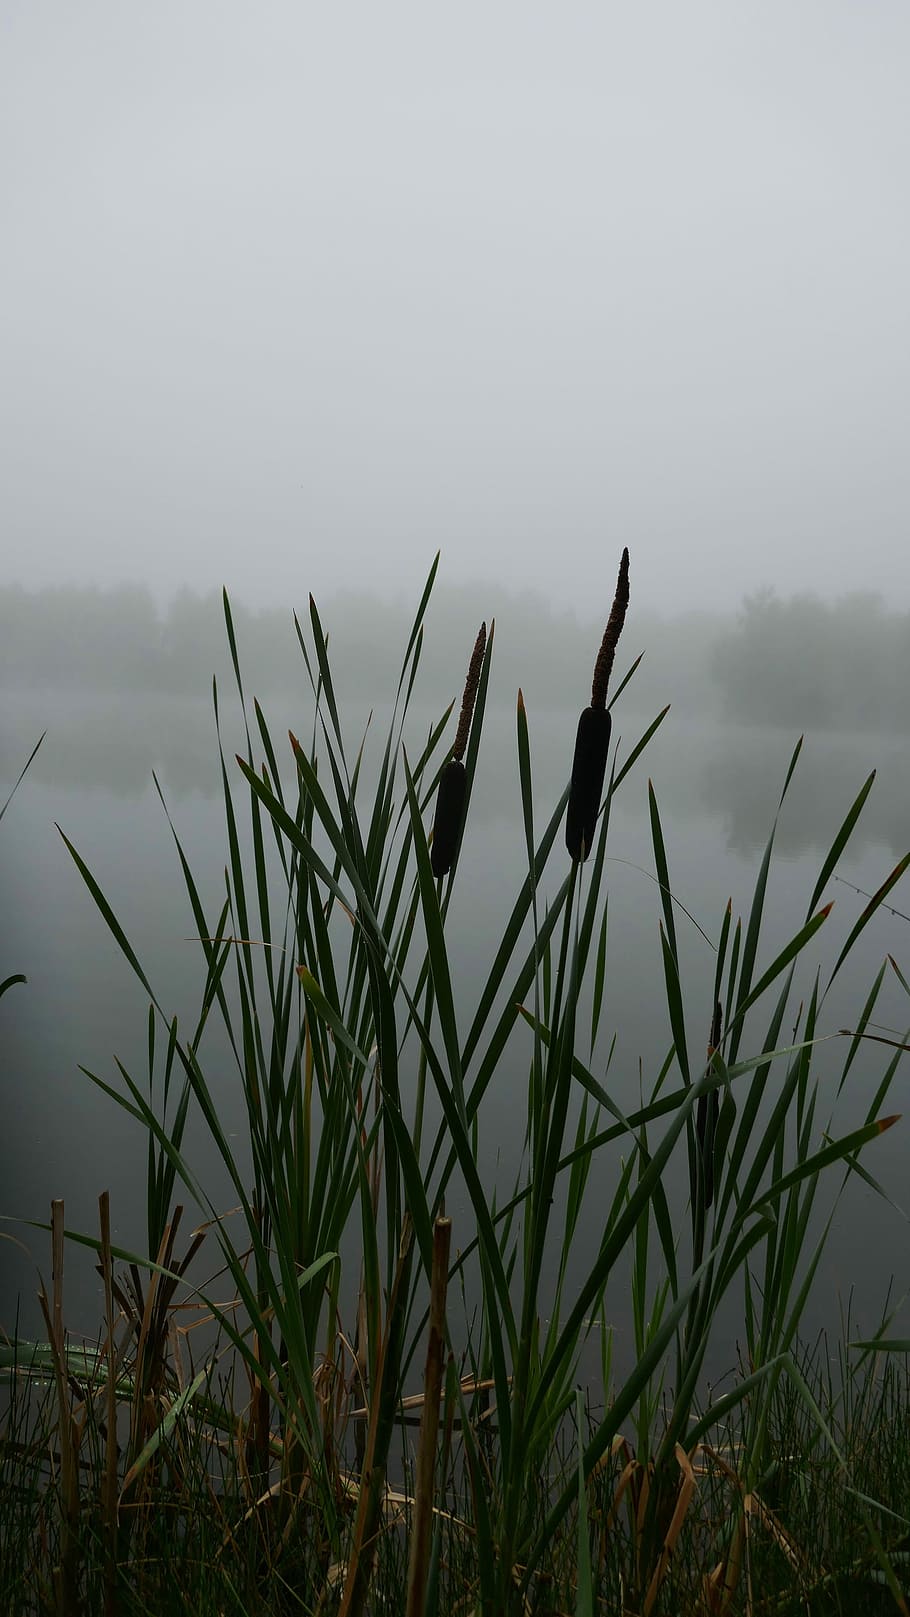 Mood, Fog, Morning, Hour, Water, Lake, morning hour, pond, reed, bank